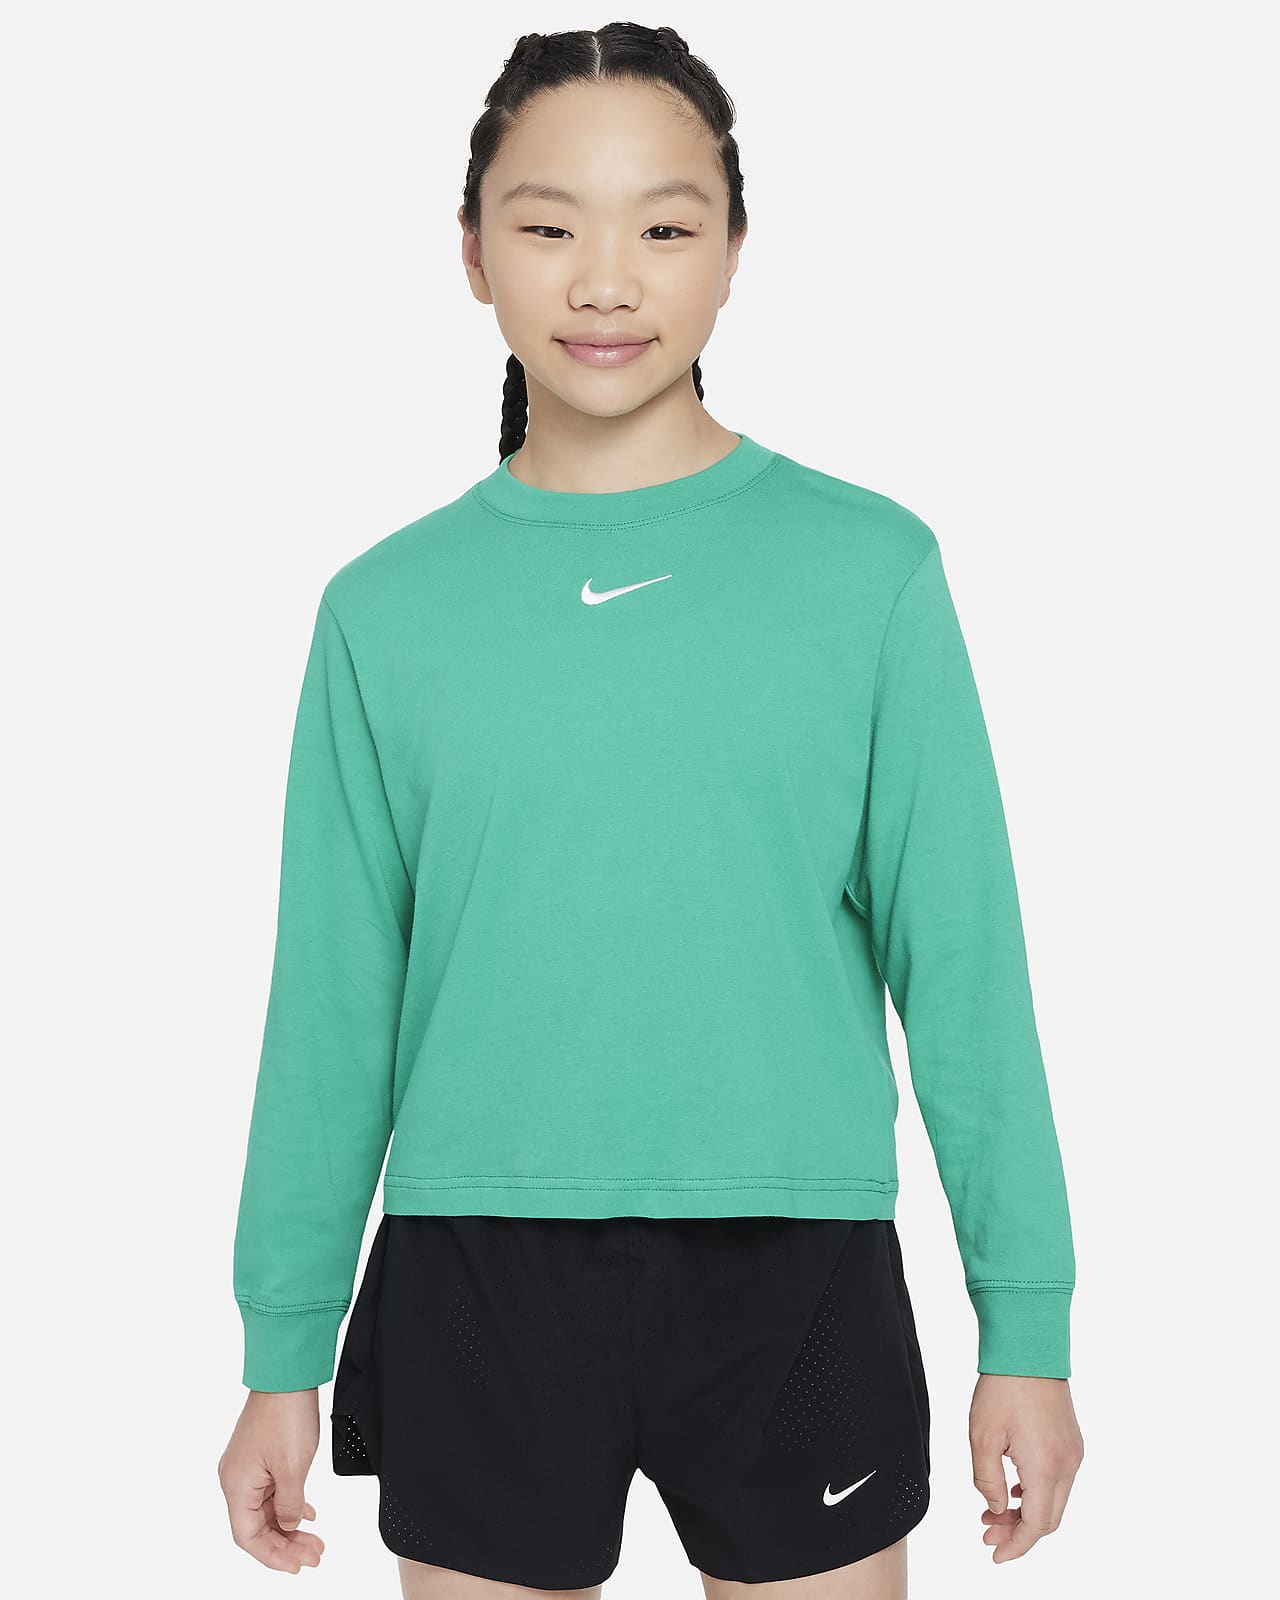 Kids\' Essential Big Long-Sleeve Nike (Girls\') T-Shirt. Sportswear